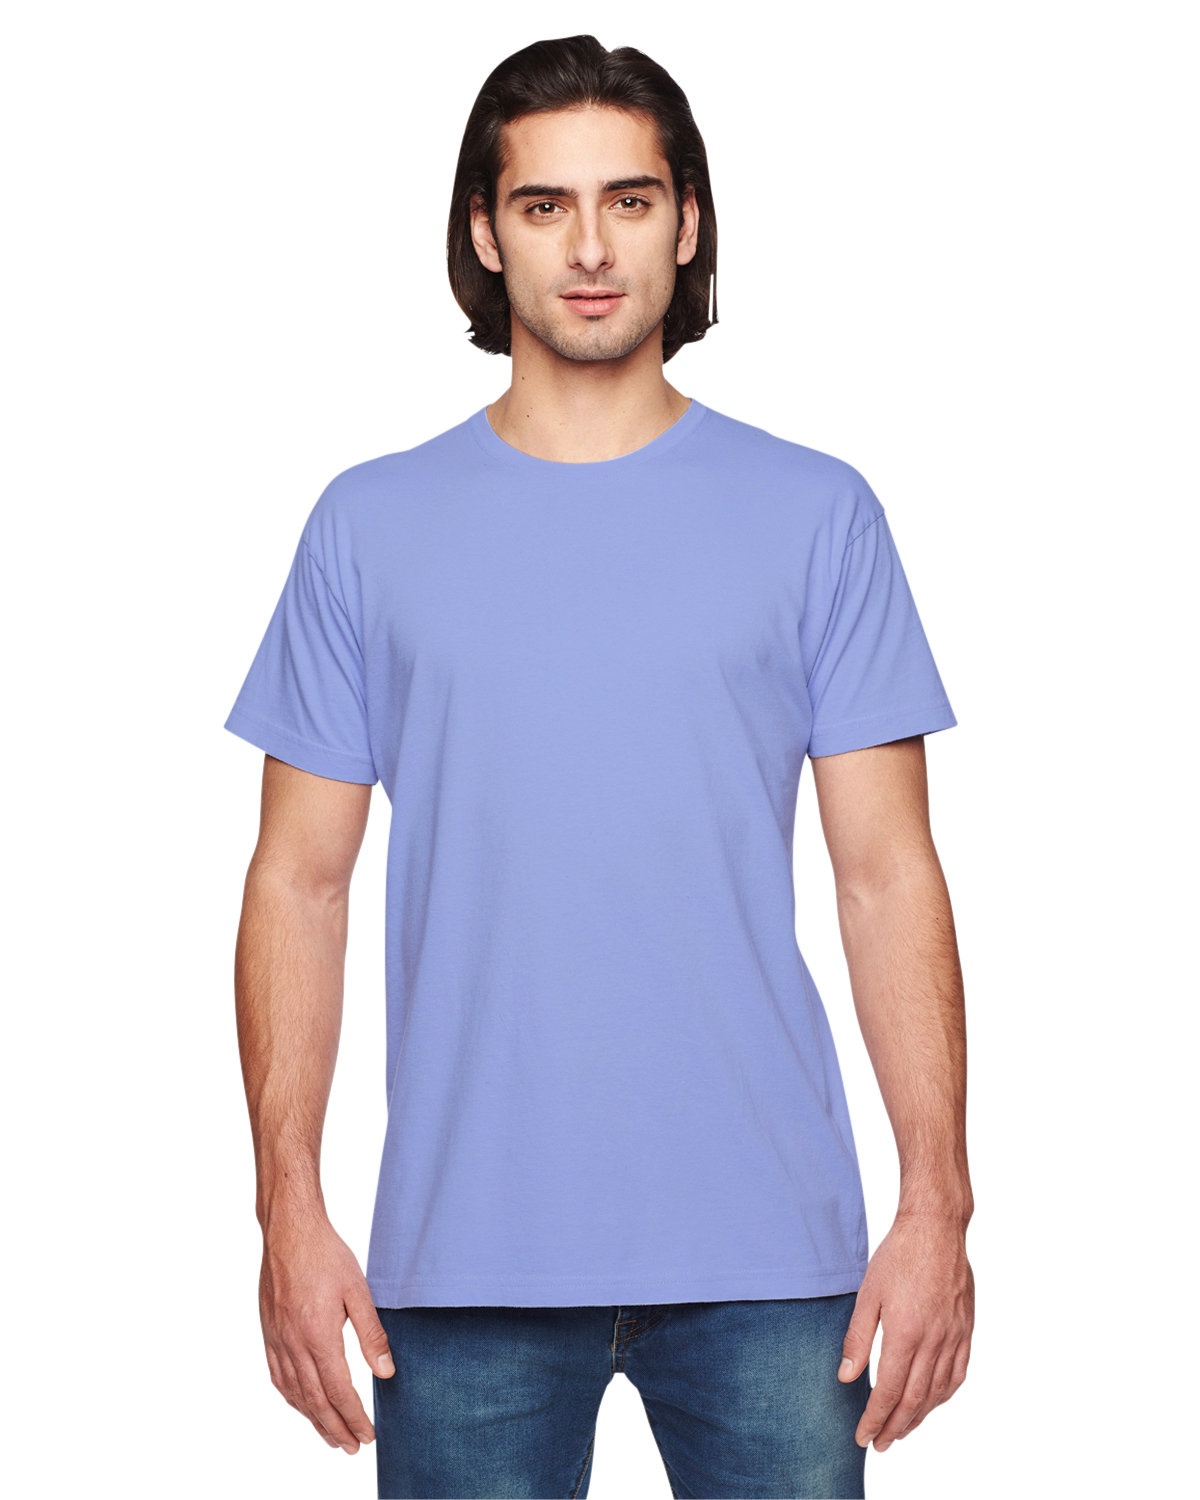 Unisex Tri-Blend Short-Sleeve Deep V-Neck T-Shirt - Kitty Box Press